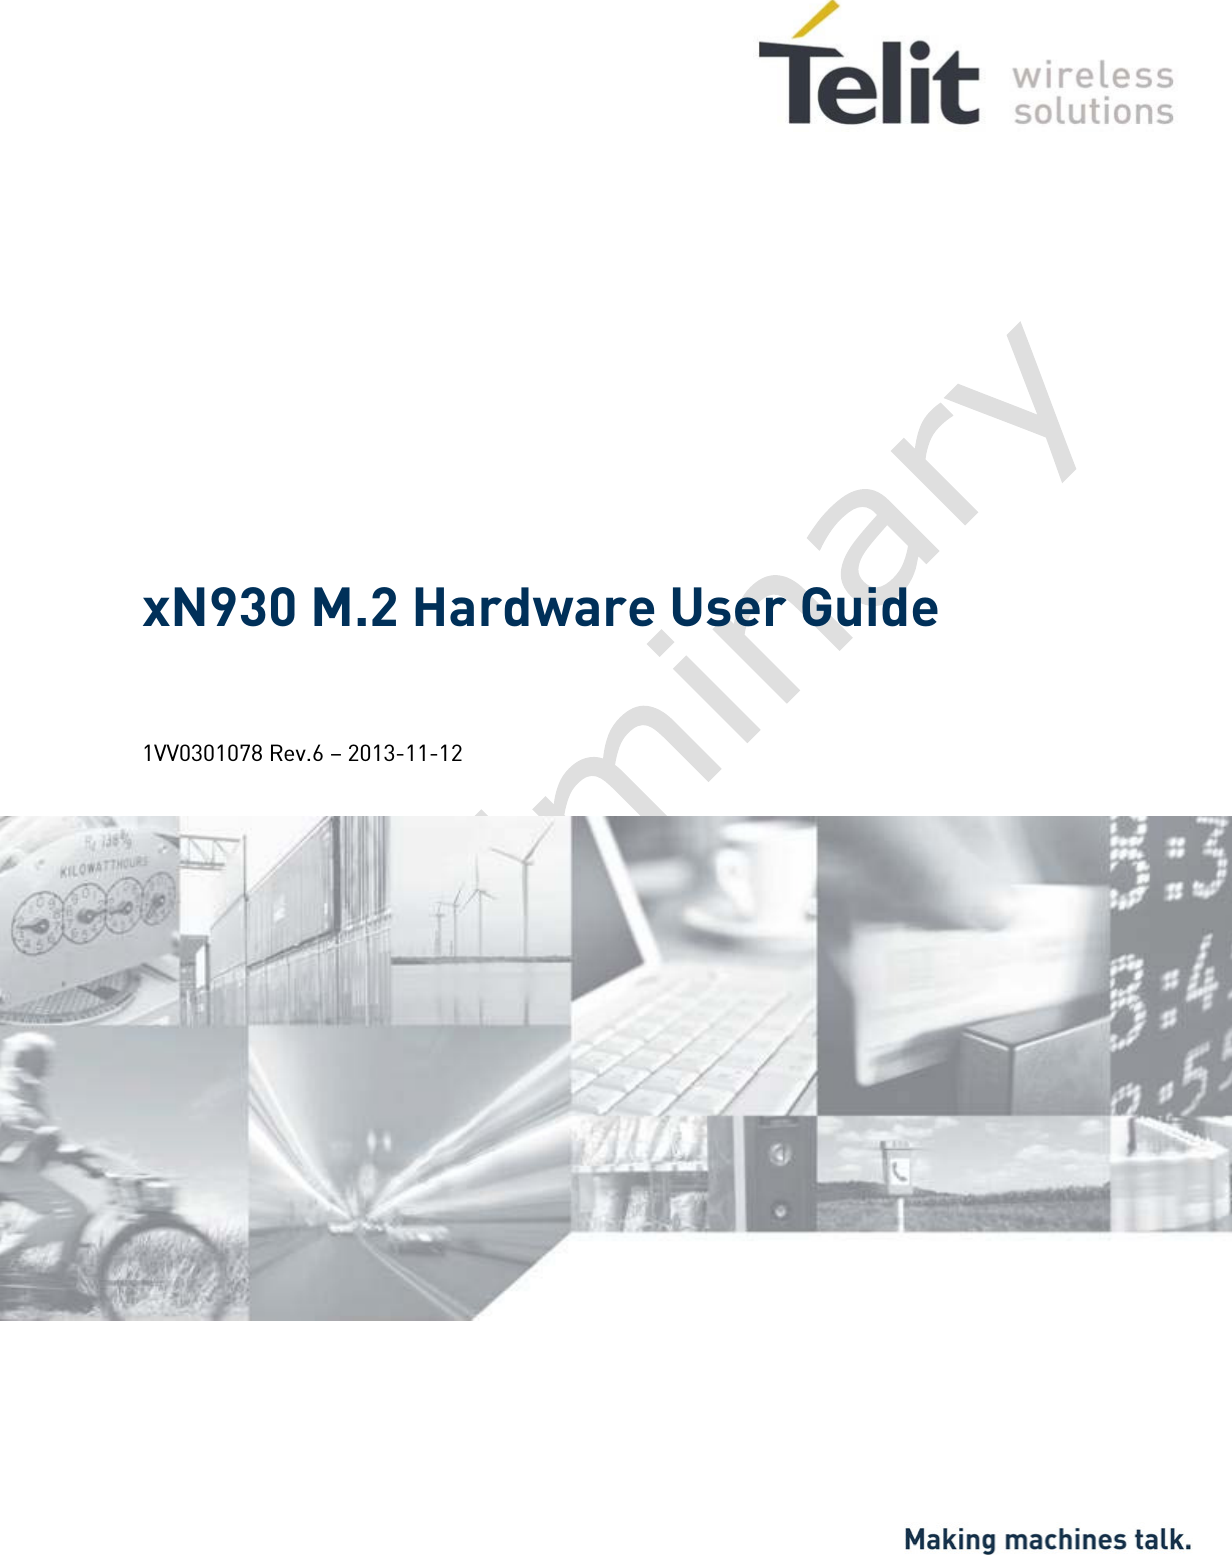                    xN930 M.2 Hardware User Guide 1VV0301078 Rev.6 – 2013-11-12    